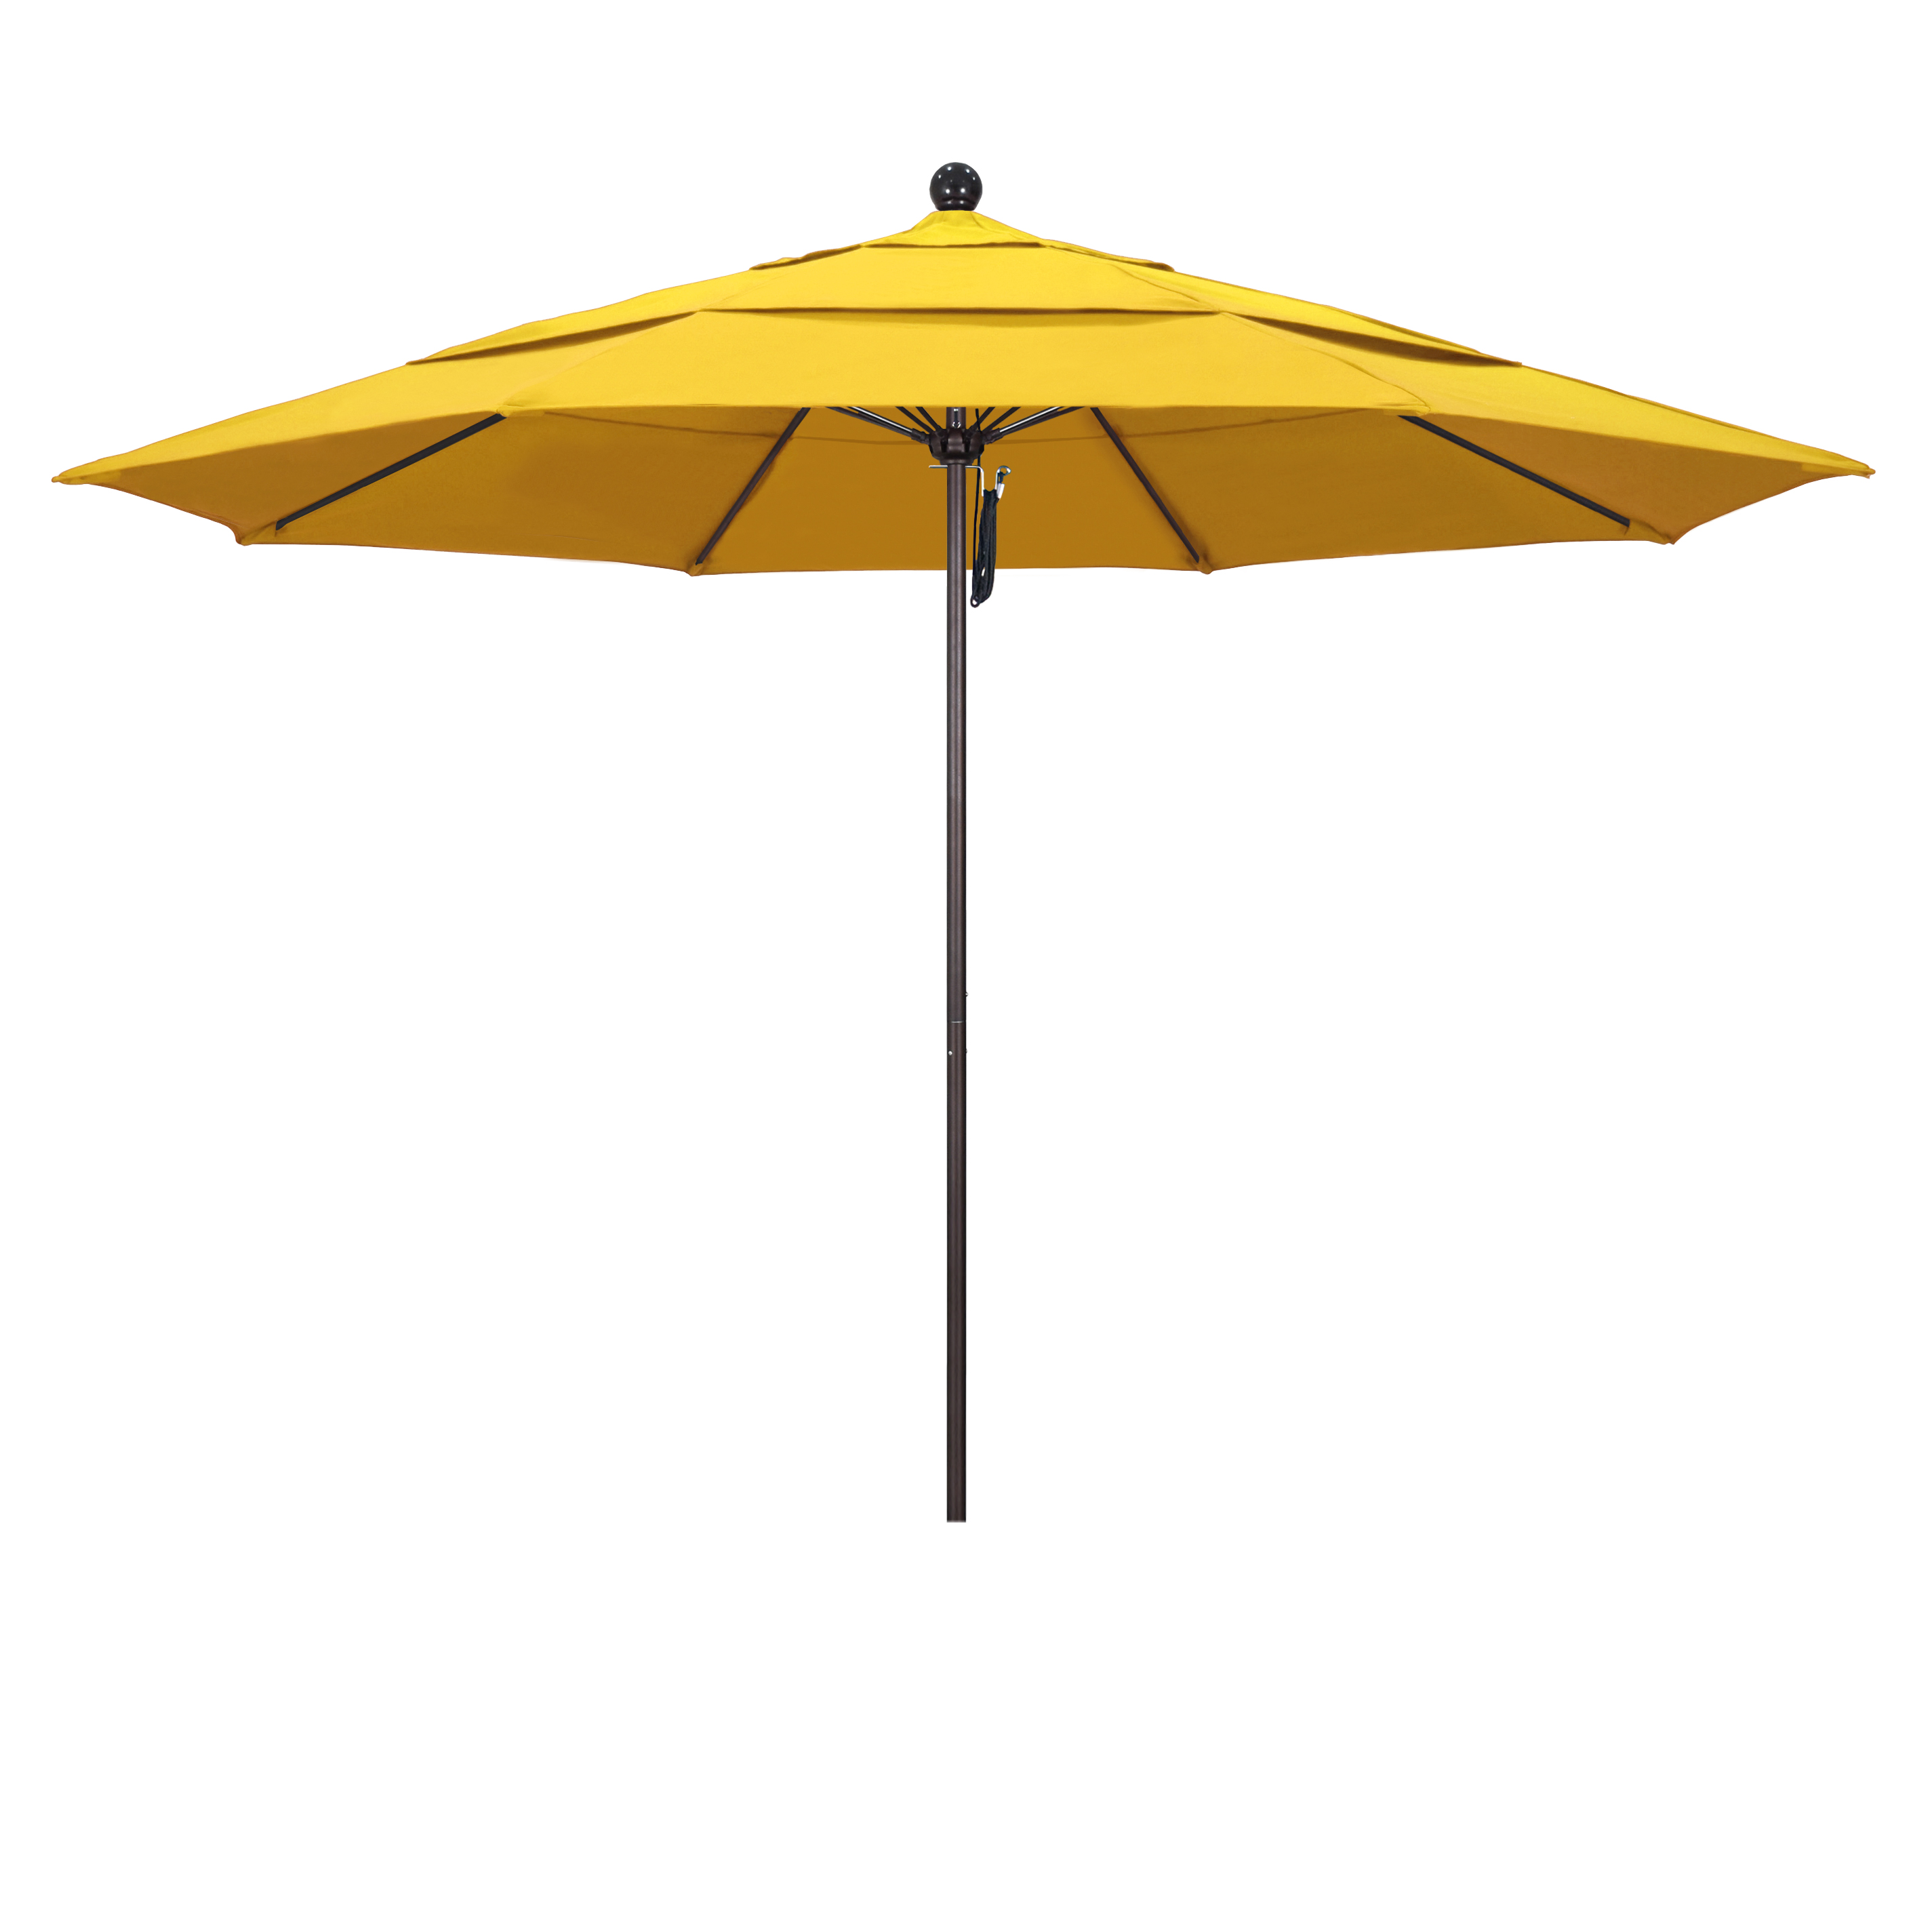 Picture of California Umbrella ALTO118117-F25-DWV 11 ft. Fiberglass Market Umbrella PO DVent Bronze-Olefin-Lemon